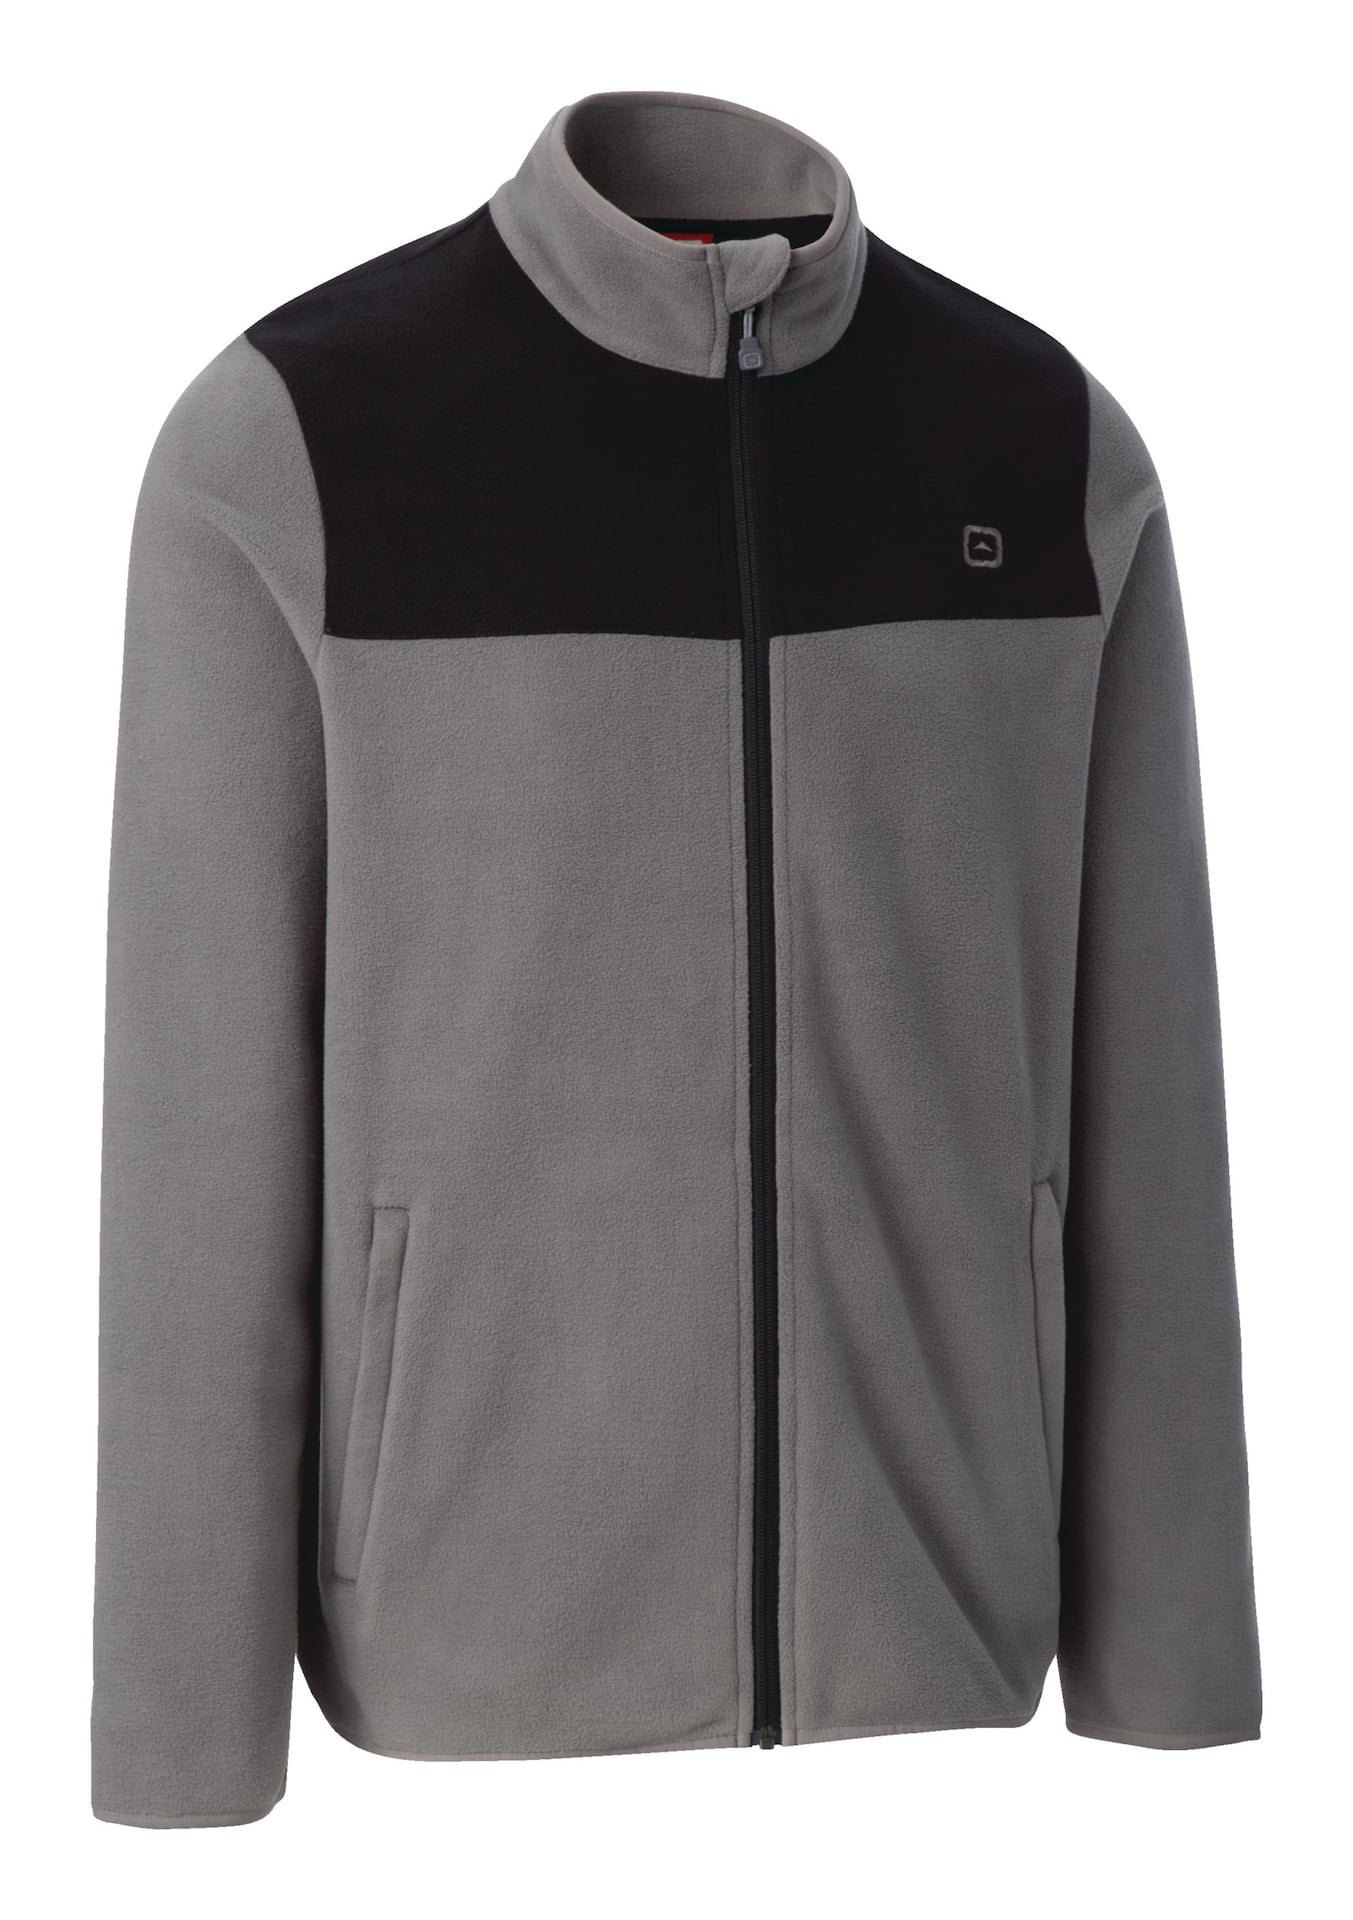 Outbound Men's Smith Warm Comfortable Fleece Jacket with Full Zip